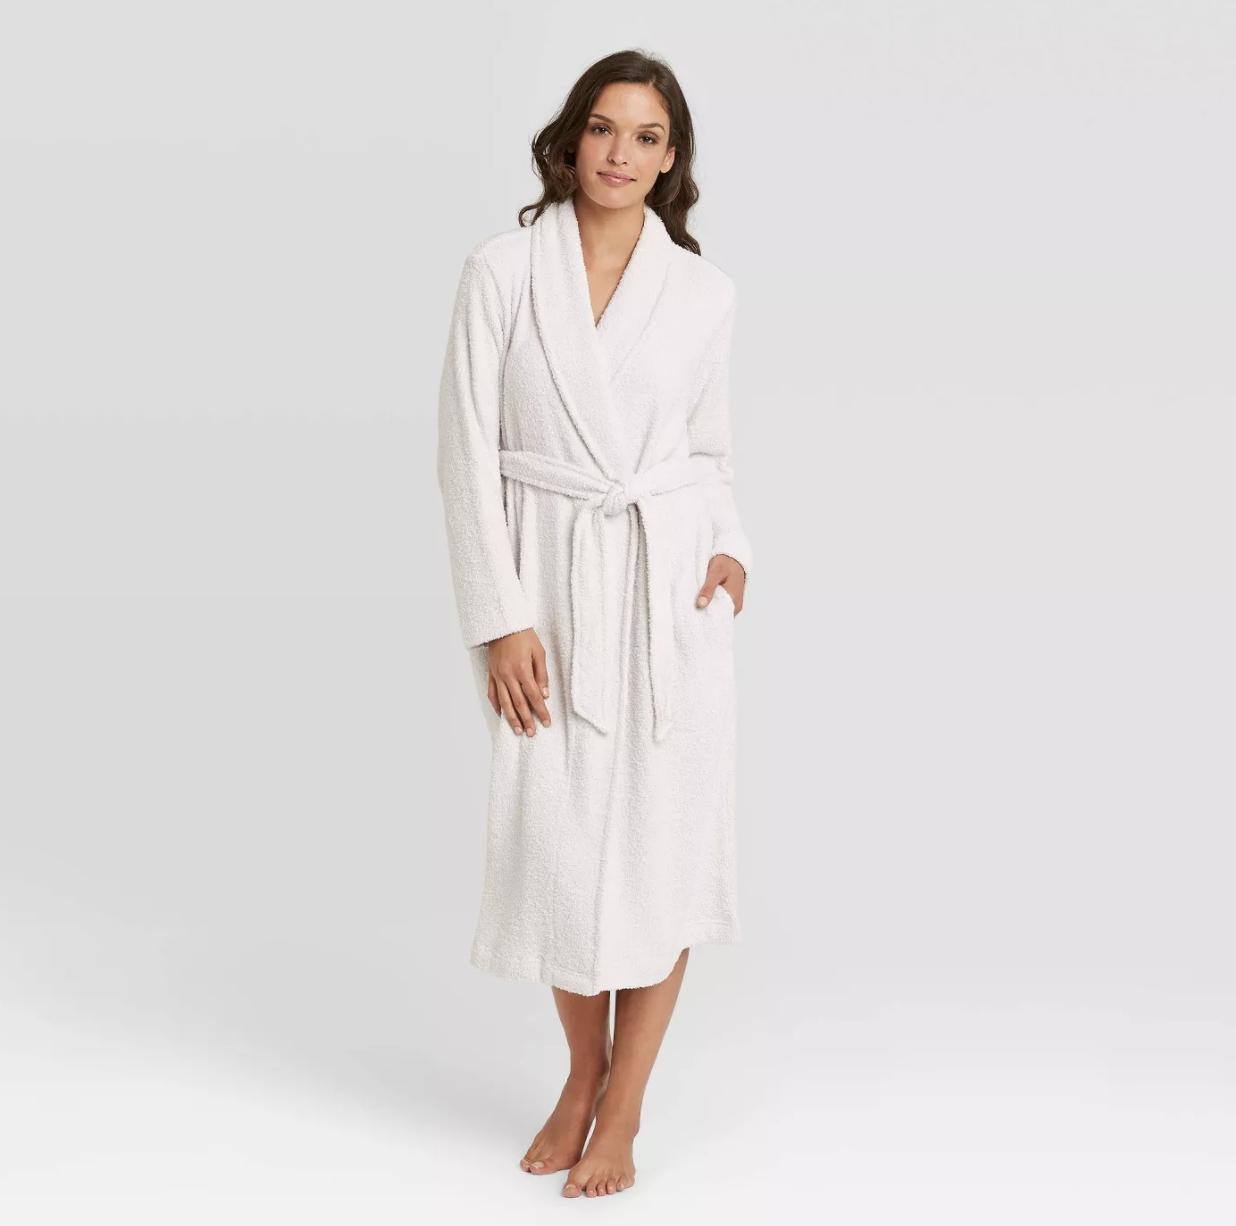 Model is wearing a white plush robe